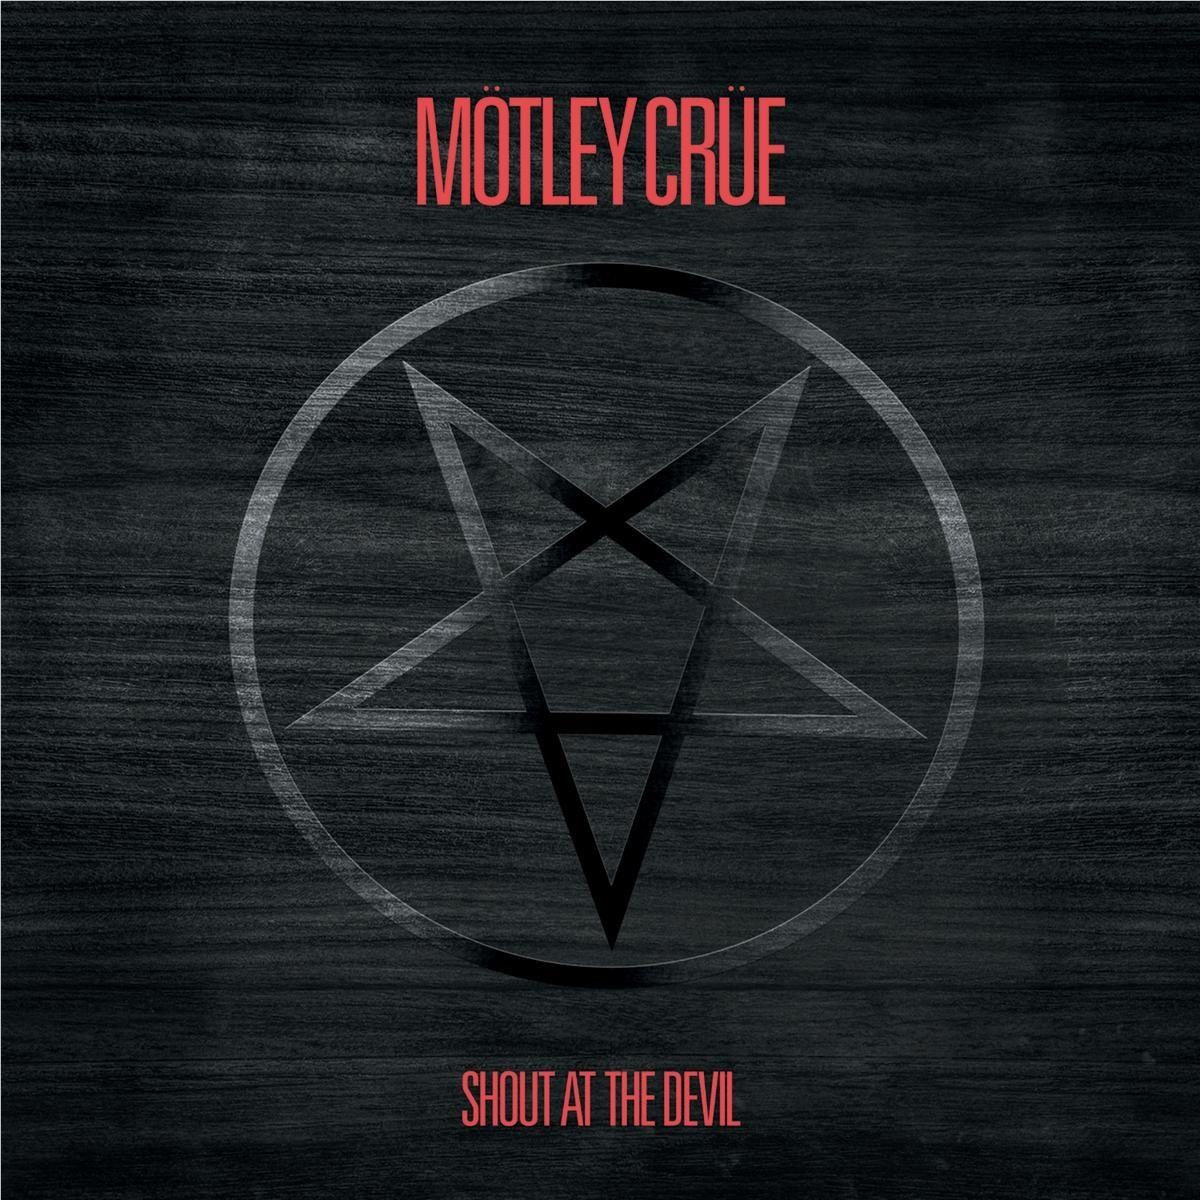 Motley Crue - Shout At The Devil (Ltd. 40th Anniversary Super Deluxe Ed. 2LP/CD/Cassette/2x7" Box Set) - Vinyl - New